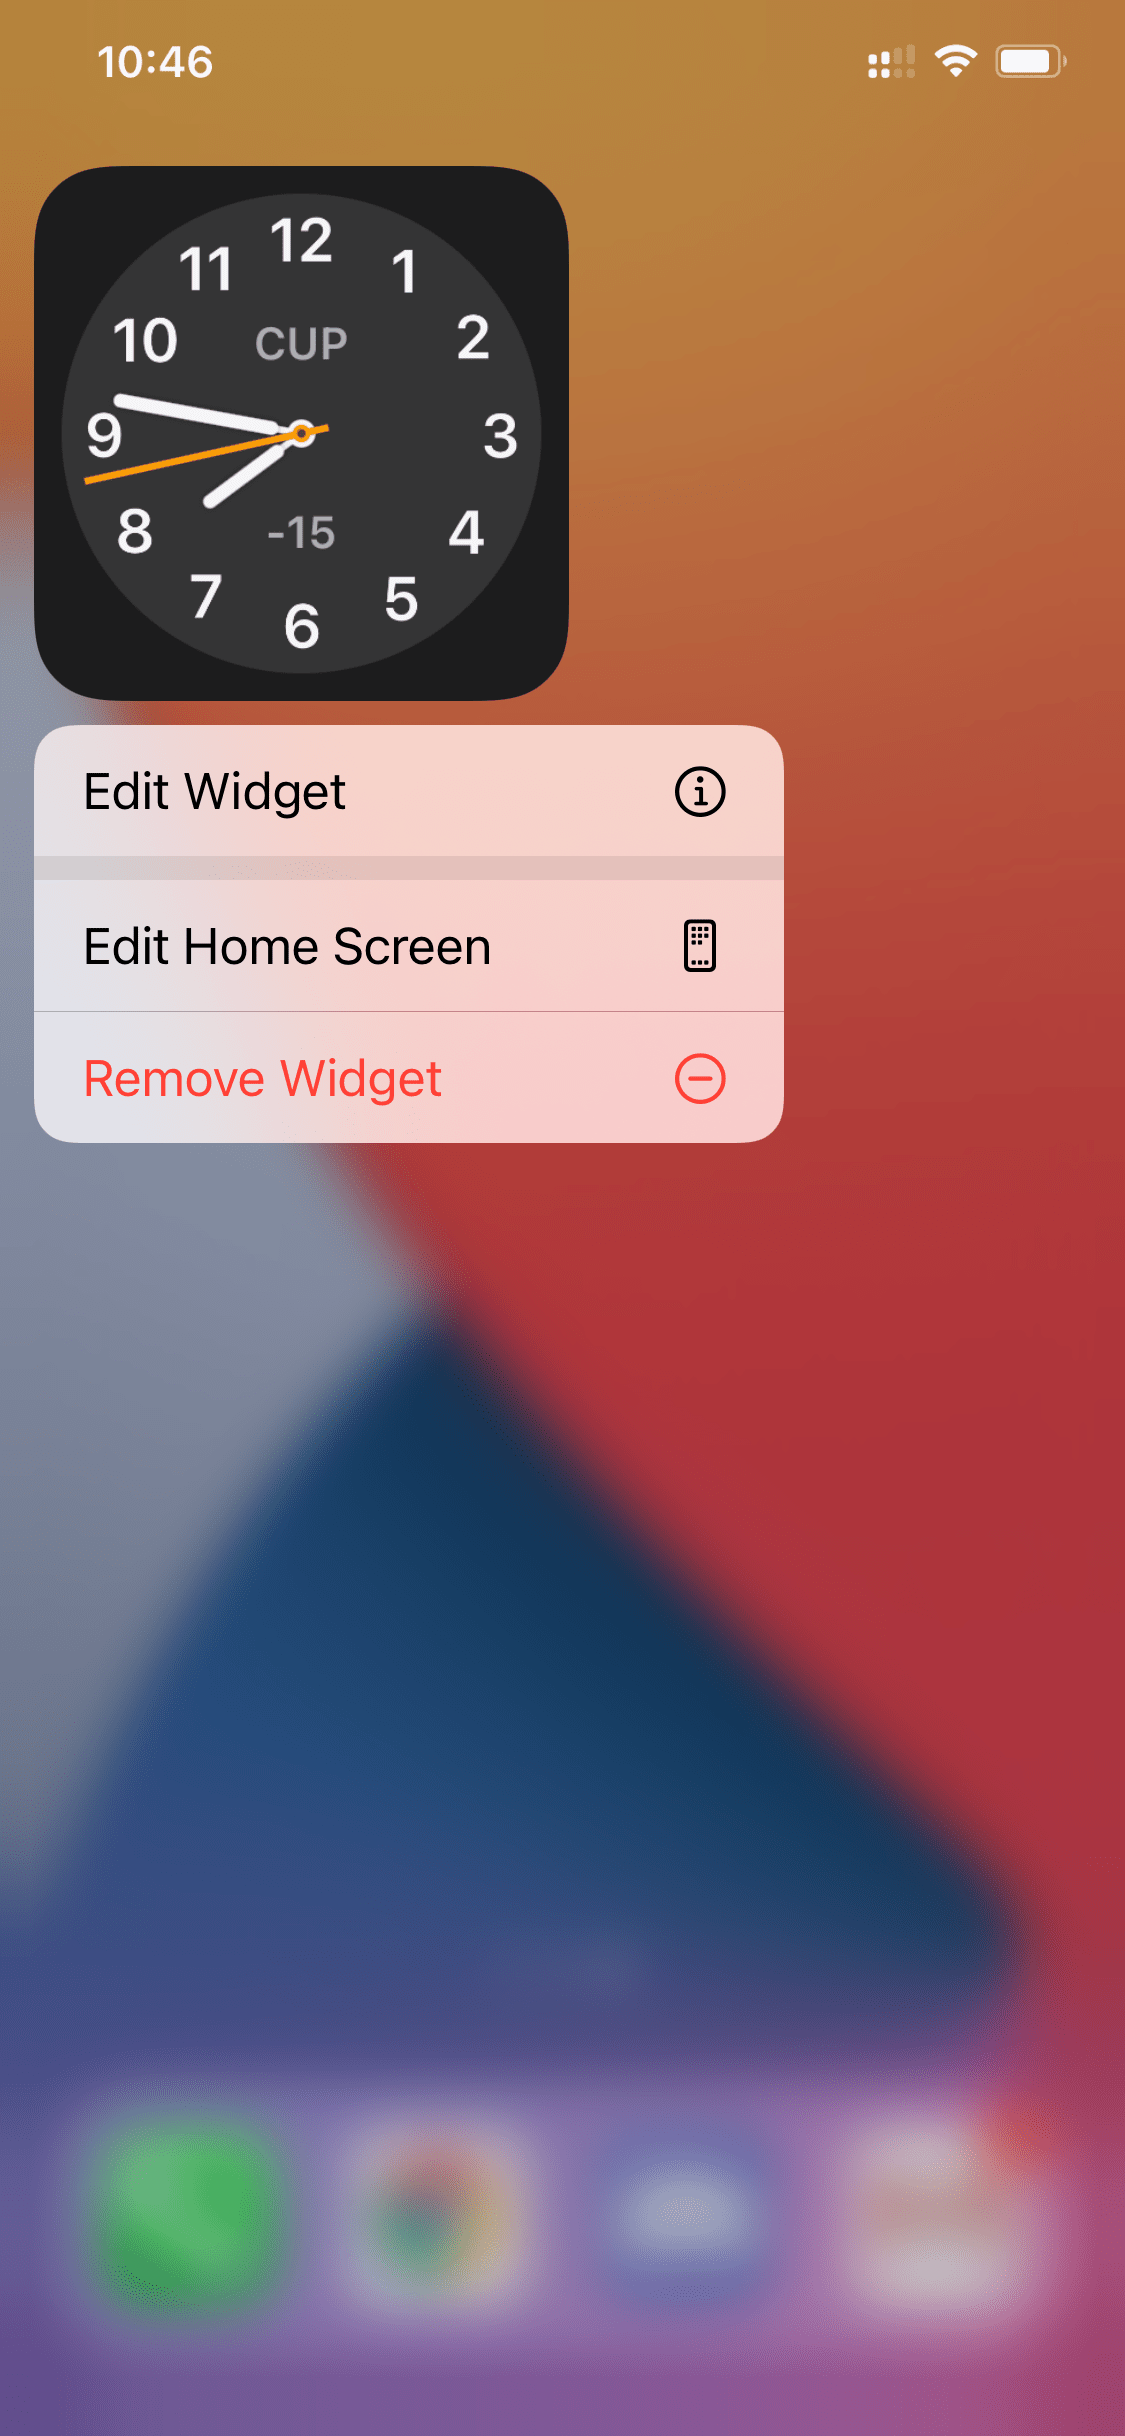 remove widget option